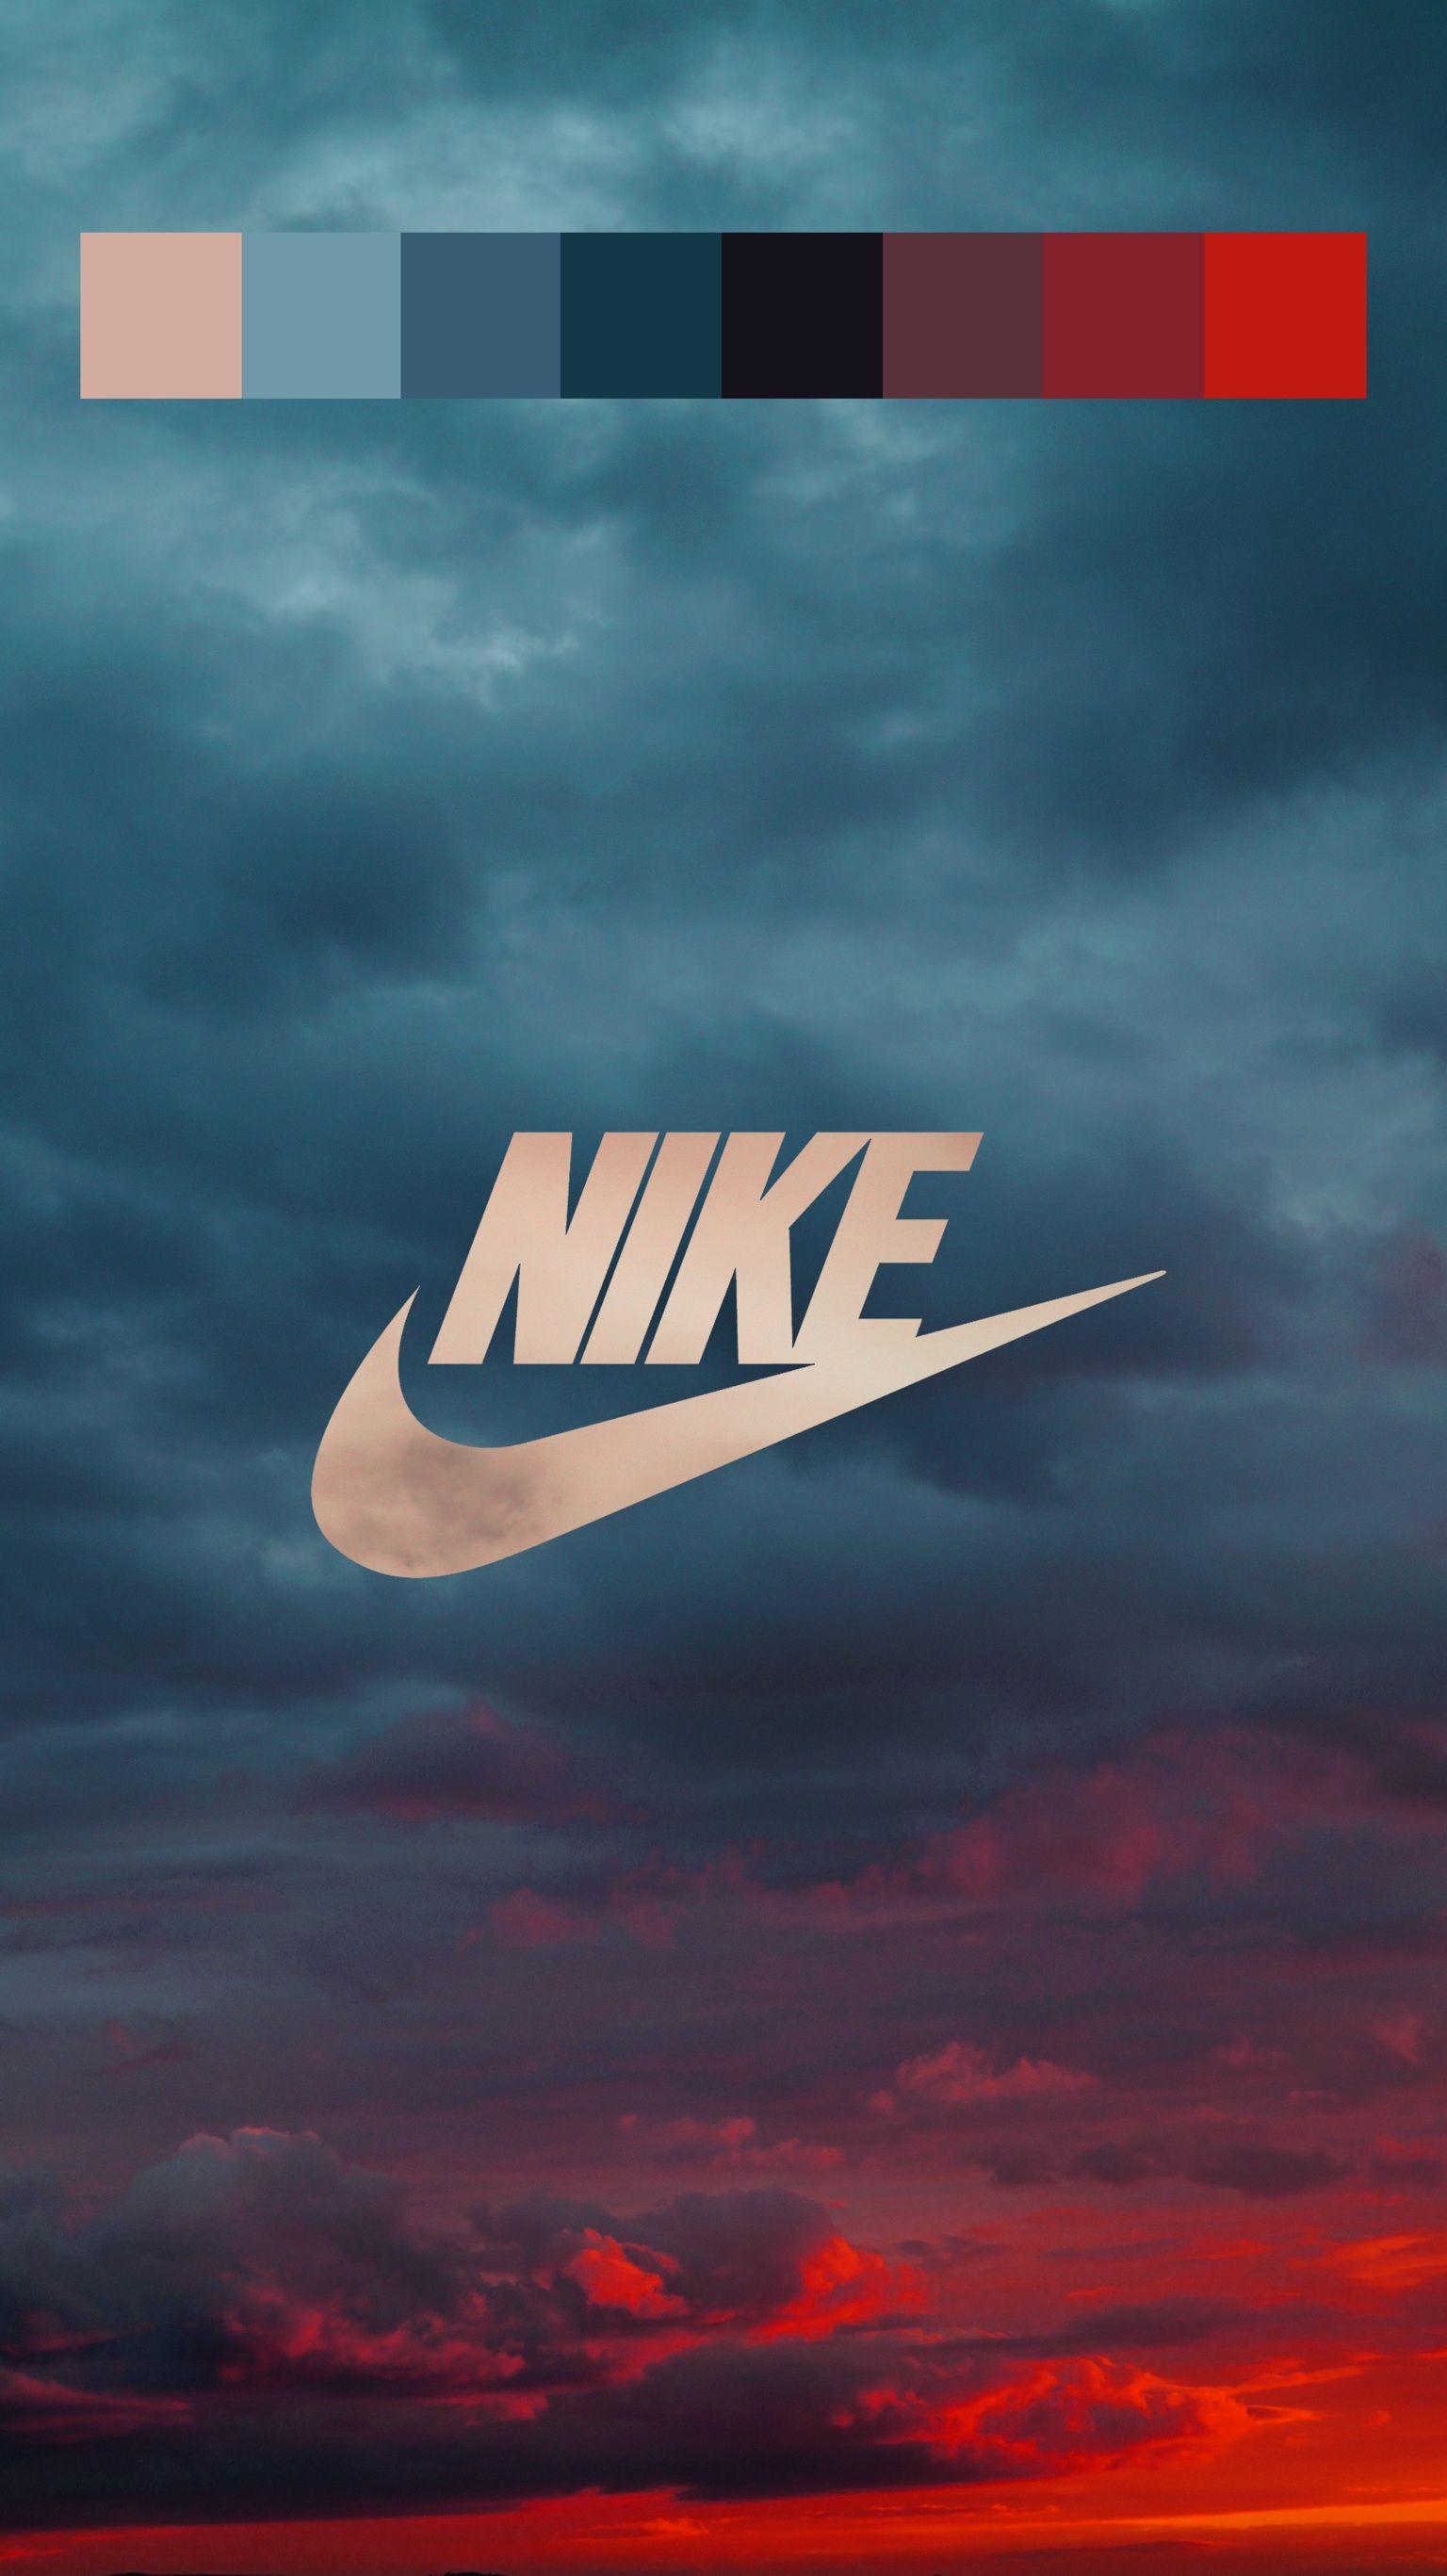 Dope Galaxy Jordan Logo - Nike3colorful9. wallpaper. Nike wallpaper